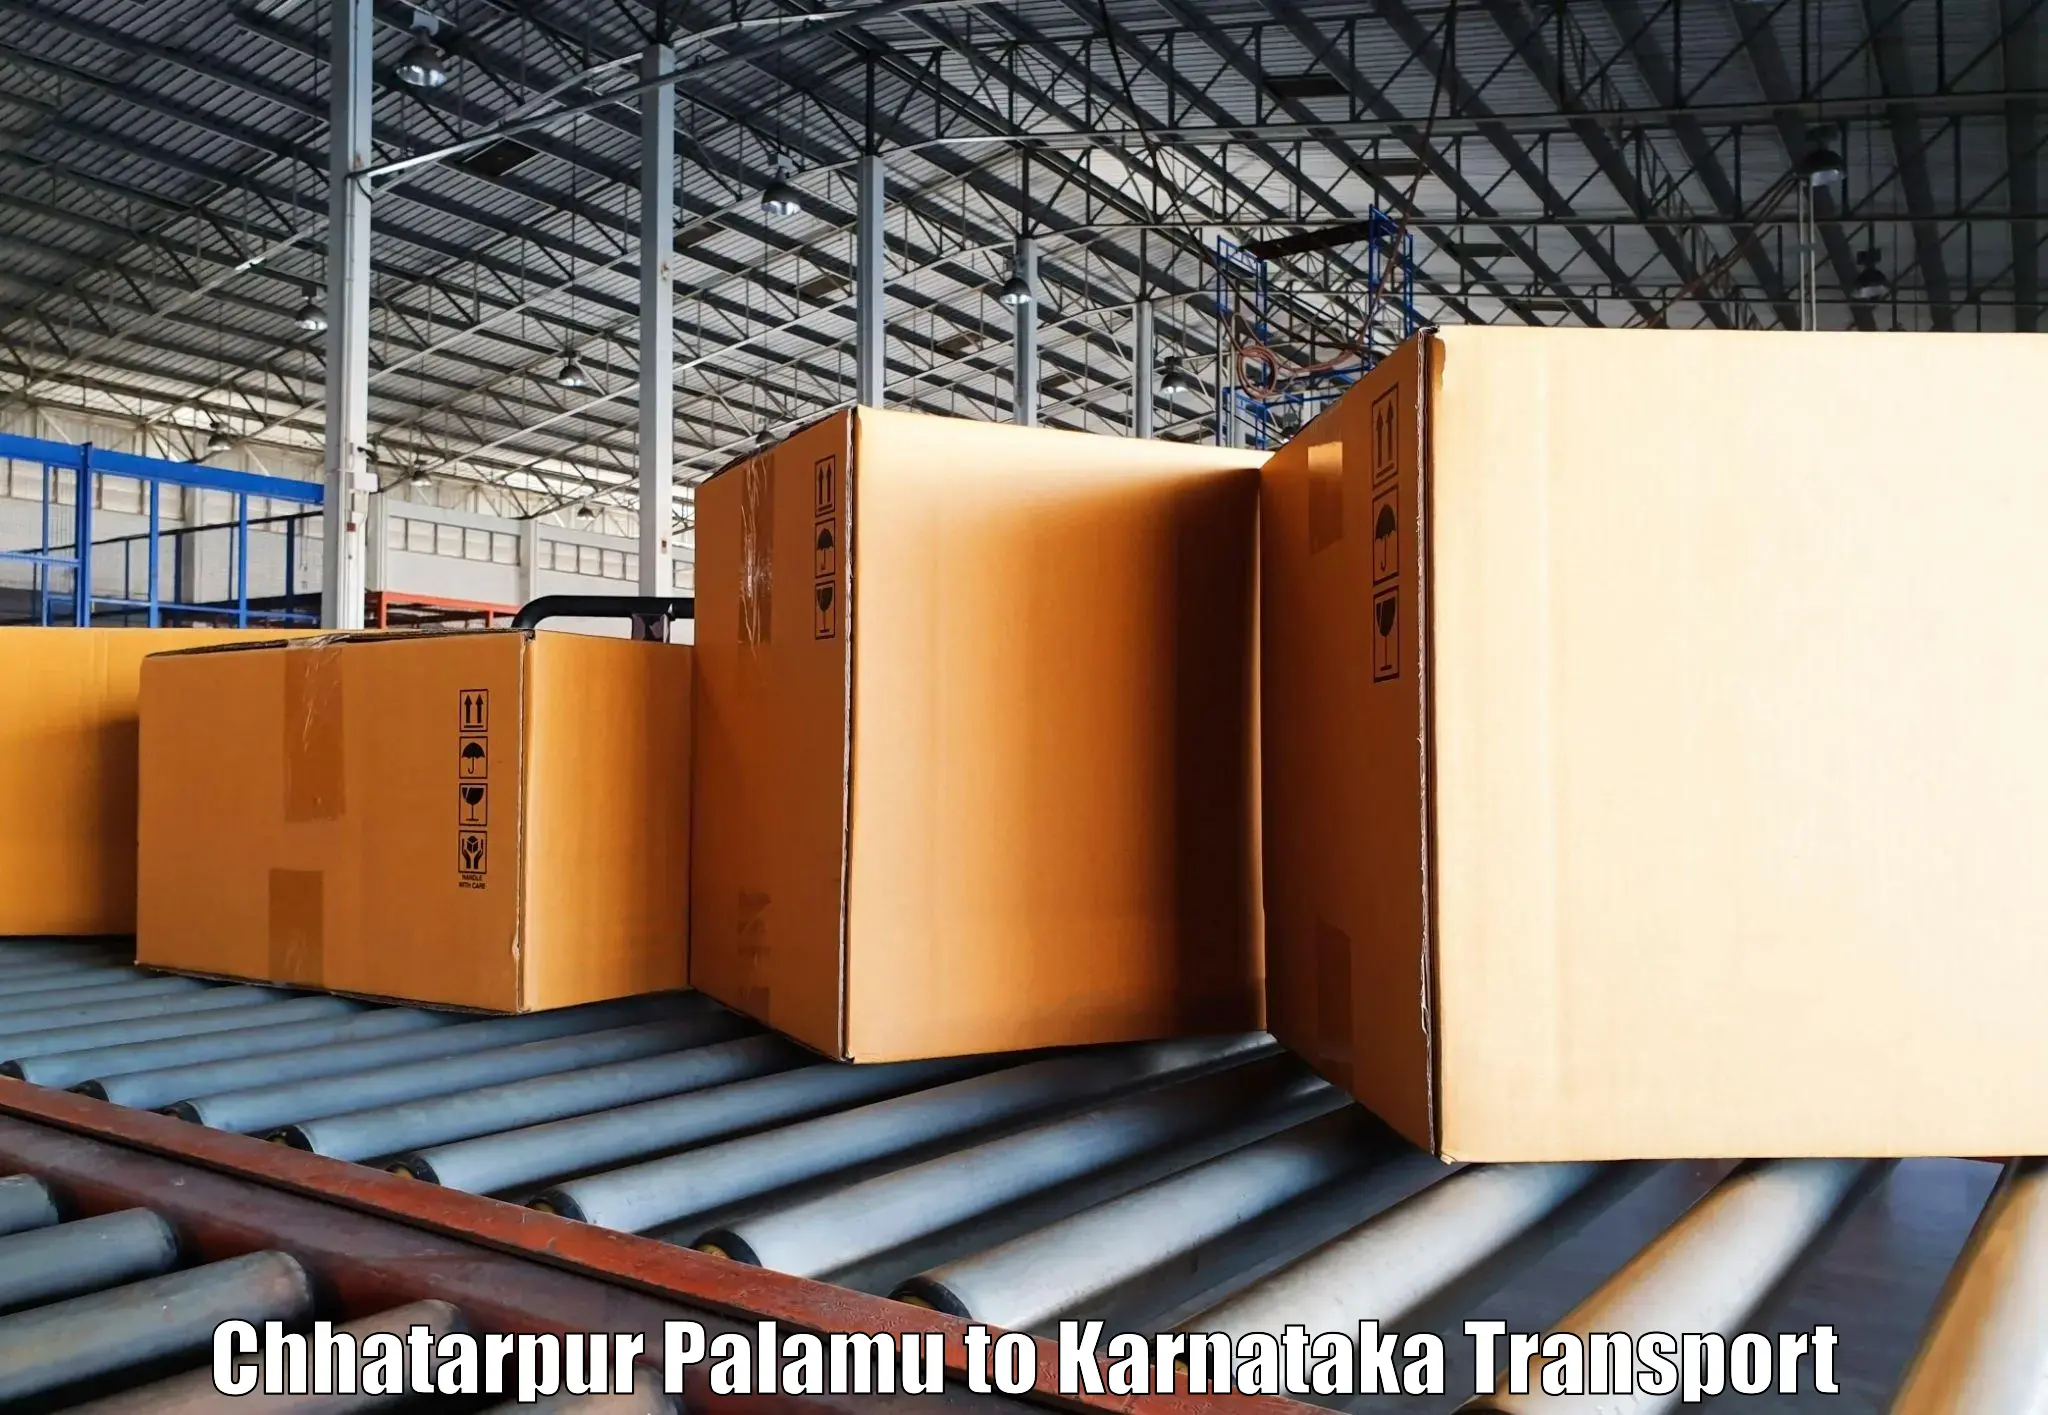 Two wheeler parcel service Chhatarpur Palamu to Gundlupete